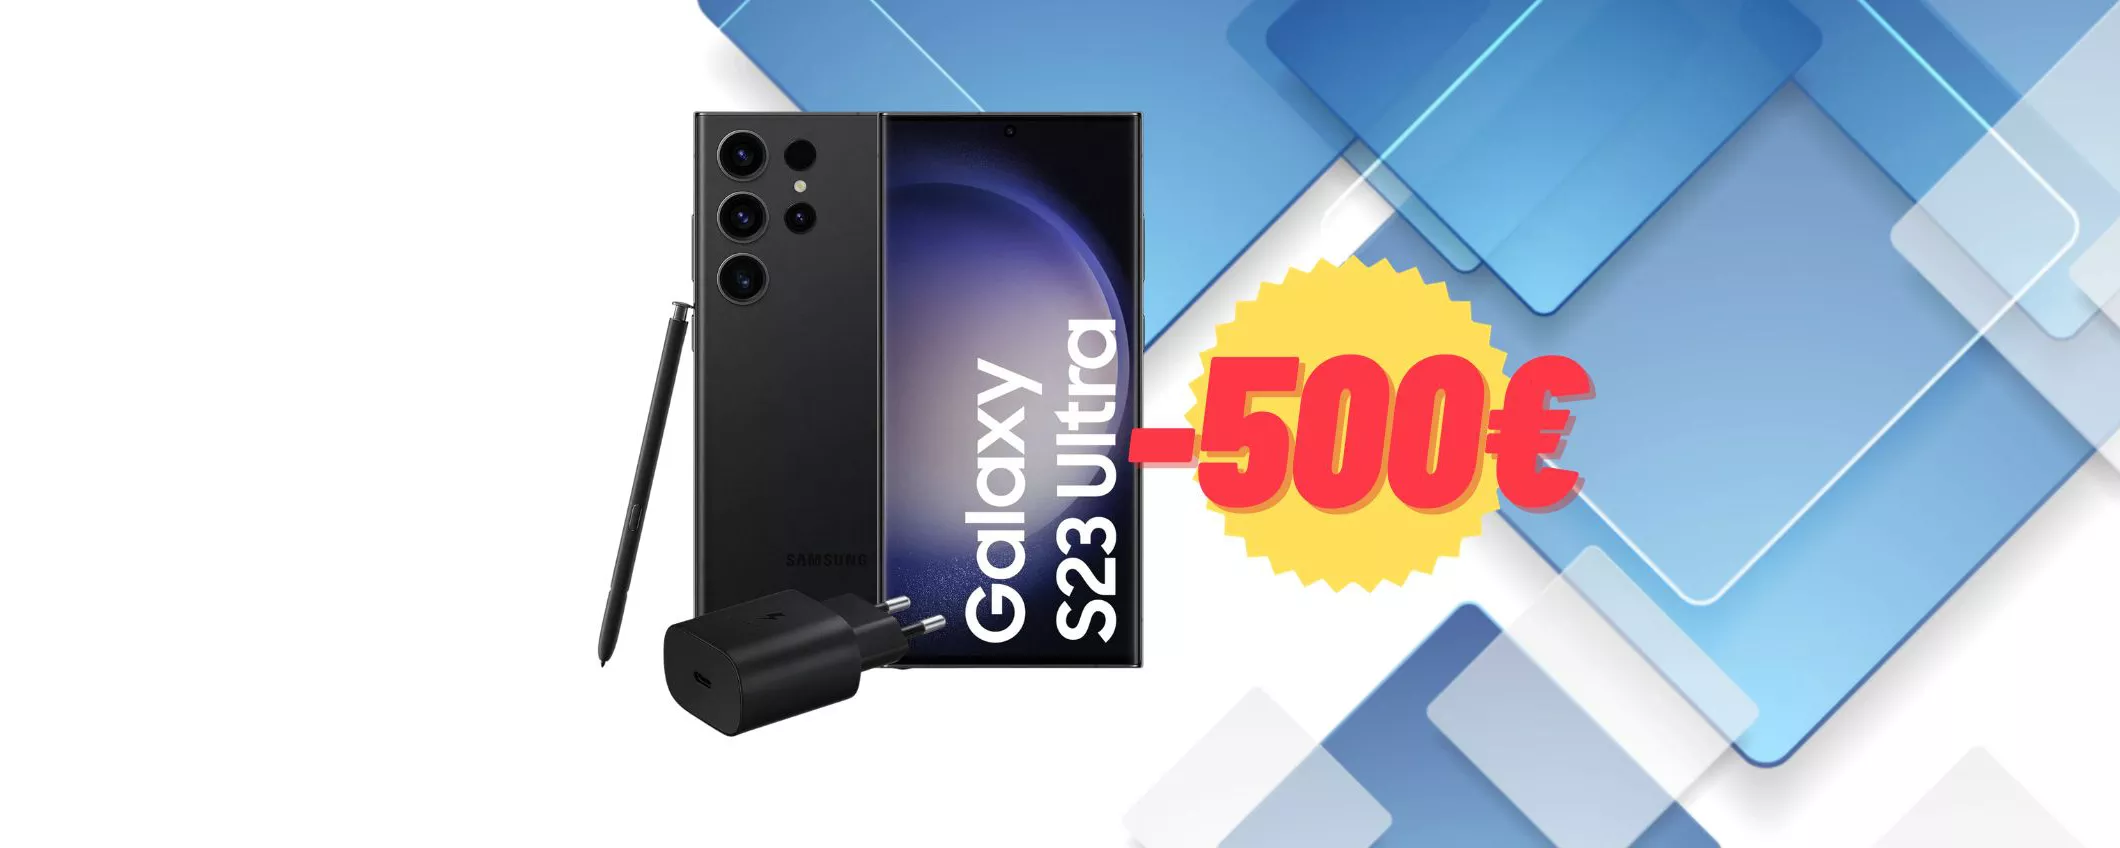 500€ IN MENO sul Samsung Galaxy S23 Ultra: offerta FOLLE su eBay